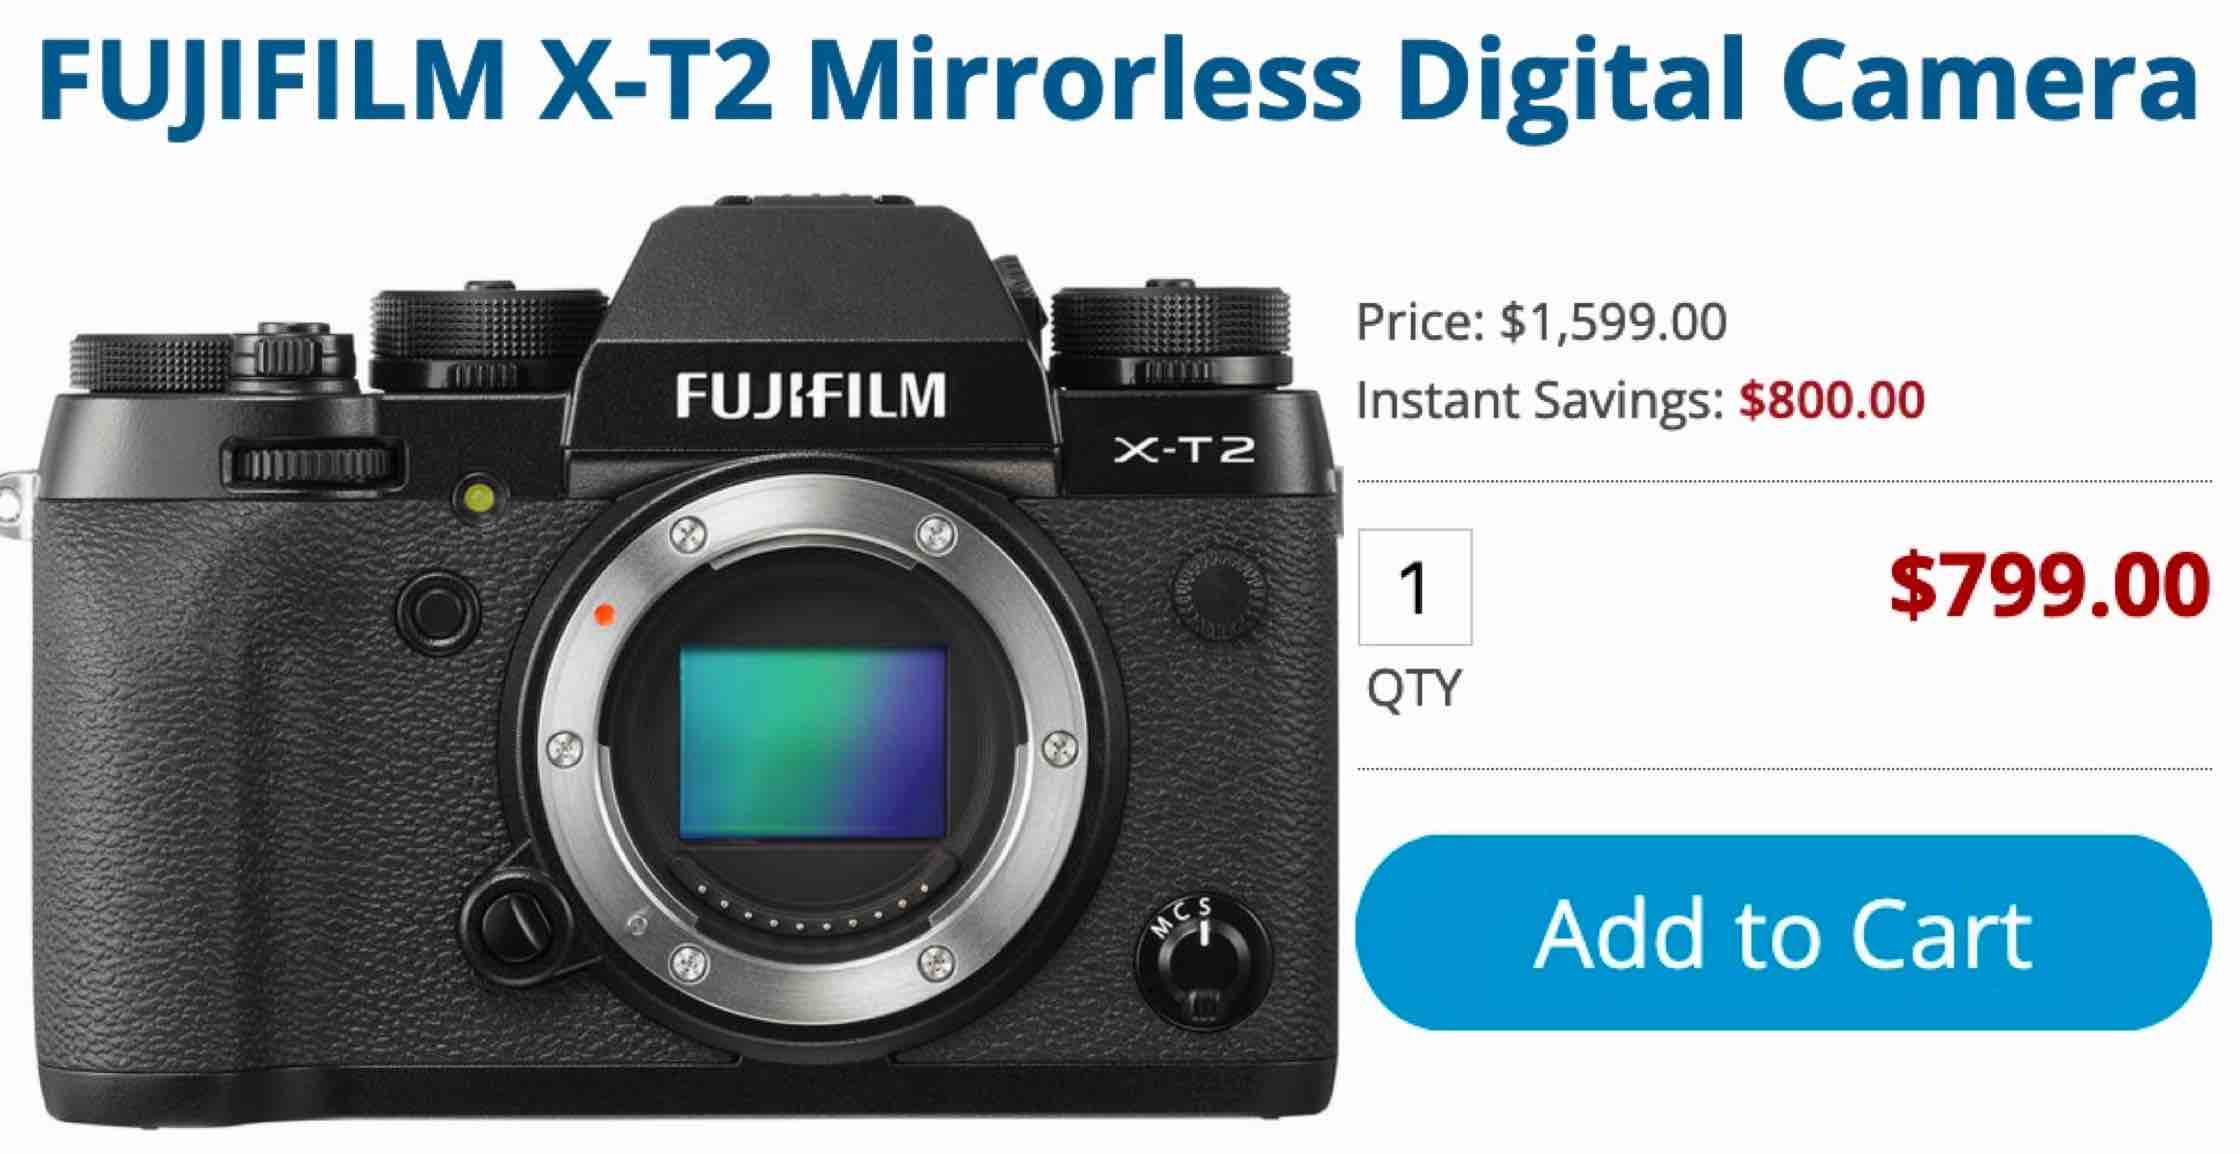 Tegen Faial Gevoel van schuld Fujifilm X-T2 Drops to $799 - Lowest Price Ever! - Fuji Rumors